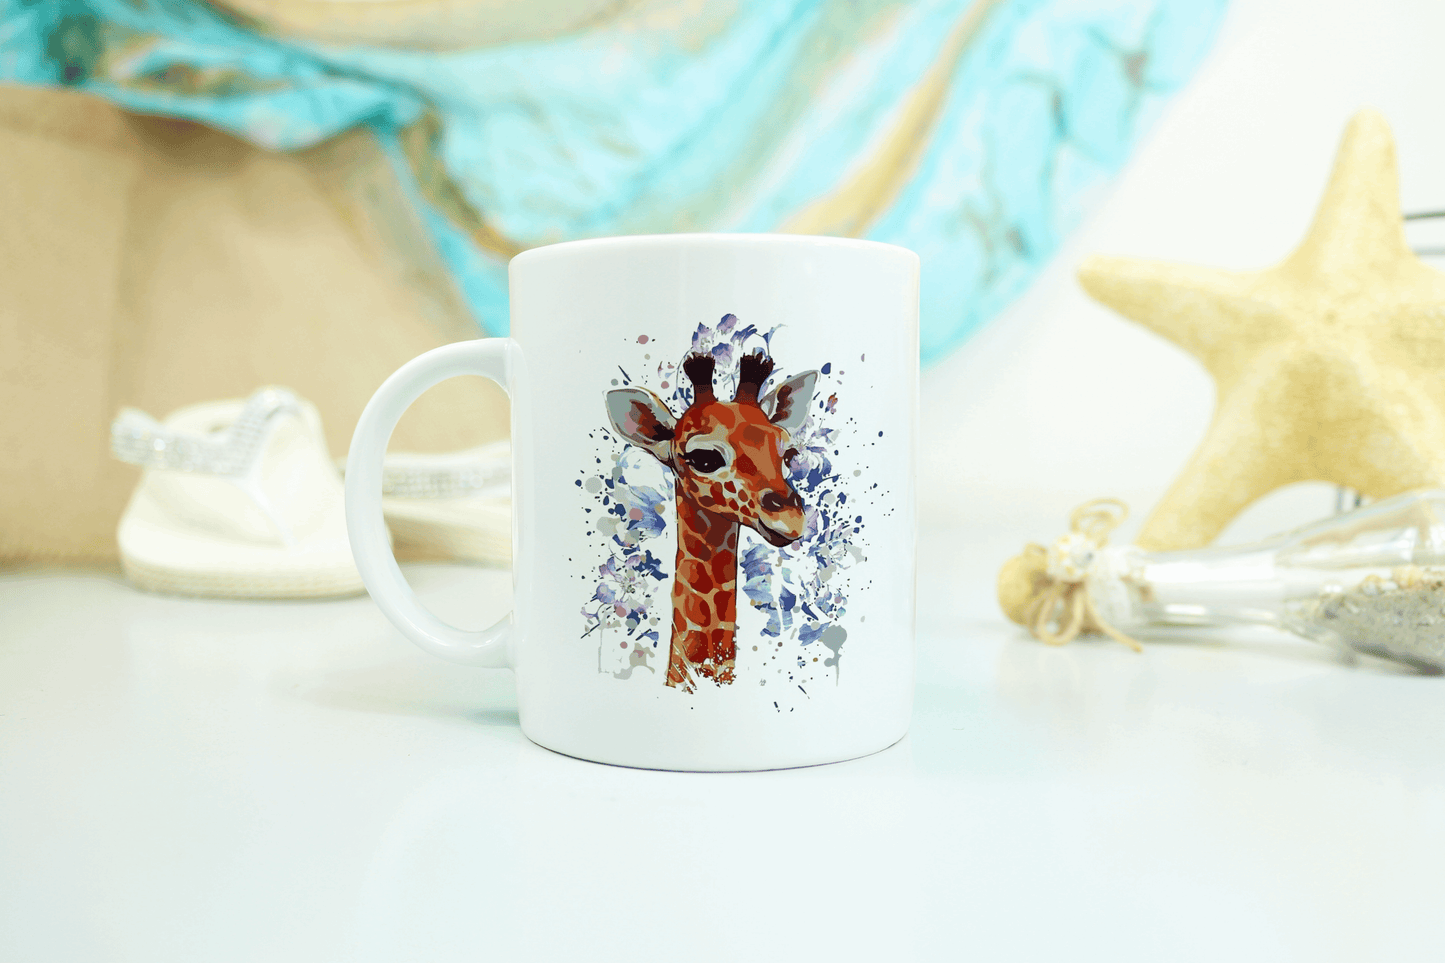  Splashed Giraffe Coffee Mug by Free Spirit Accessories sold by Free Spirit Accessories